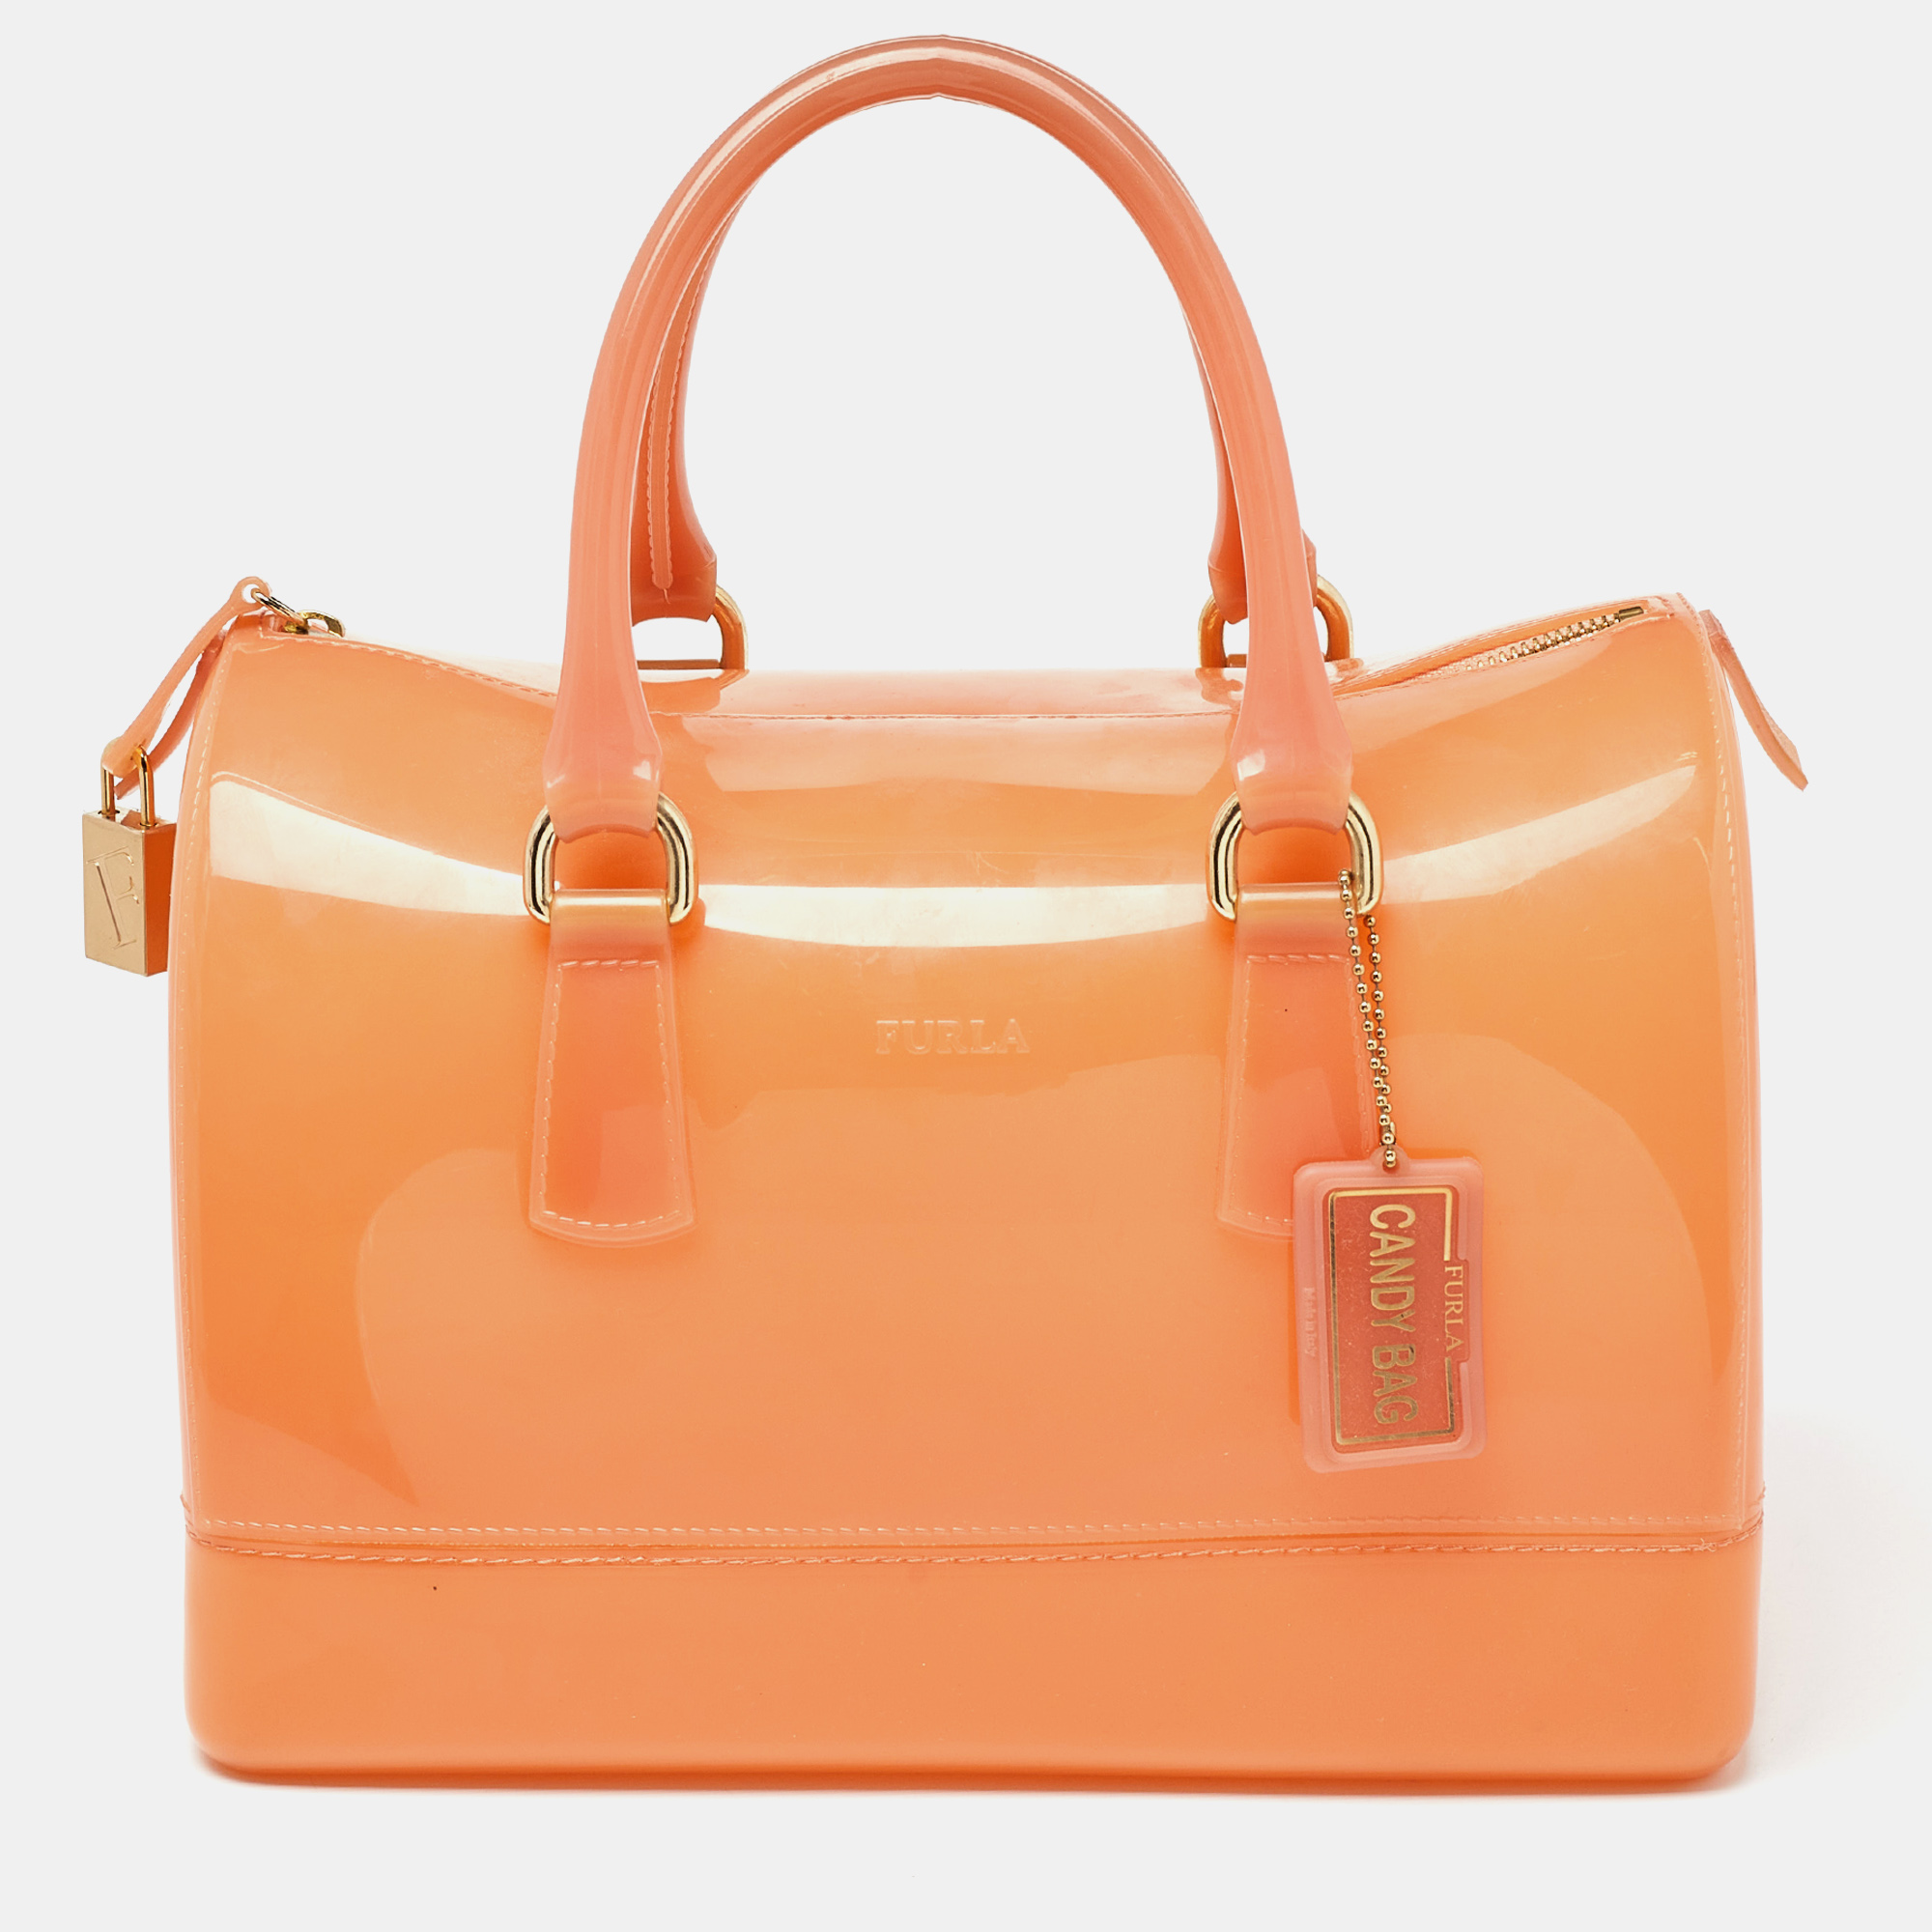 Furla orange rubber candy satchel